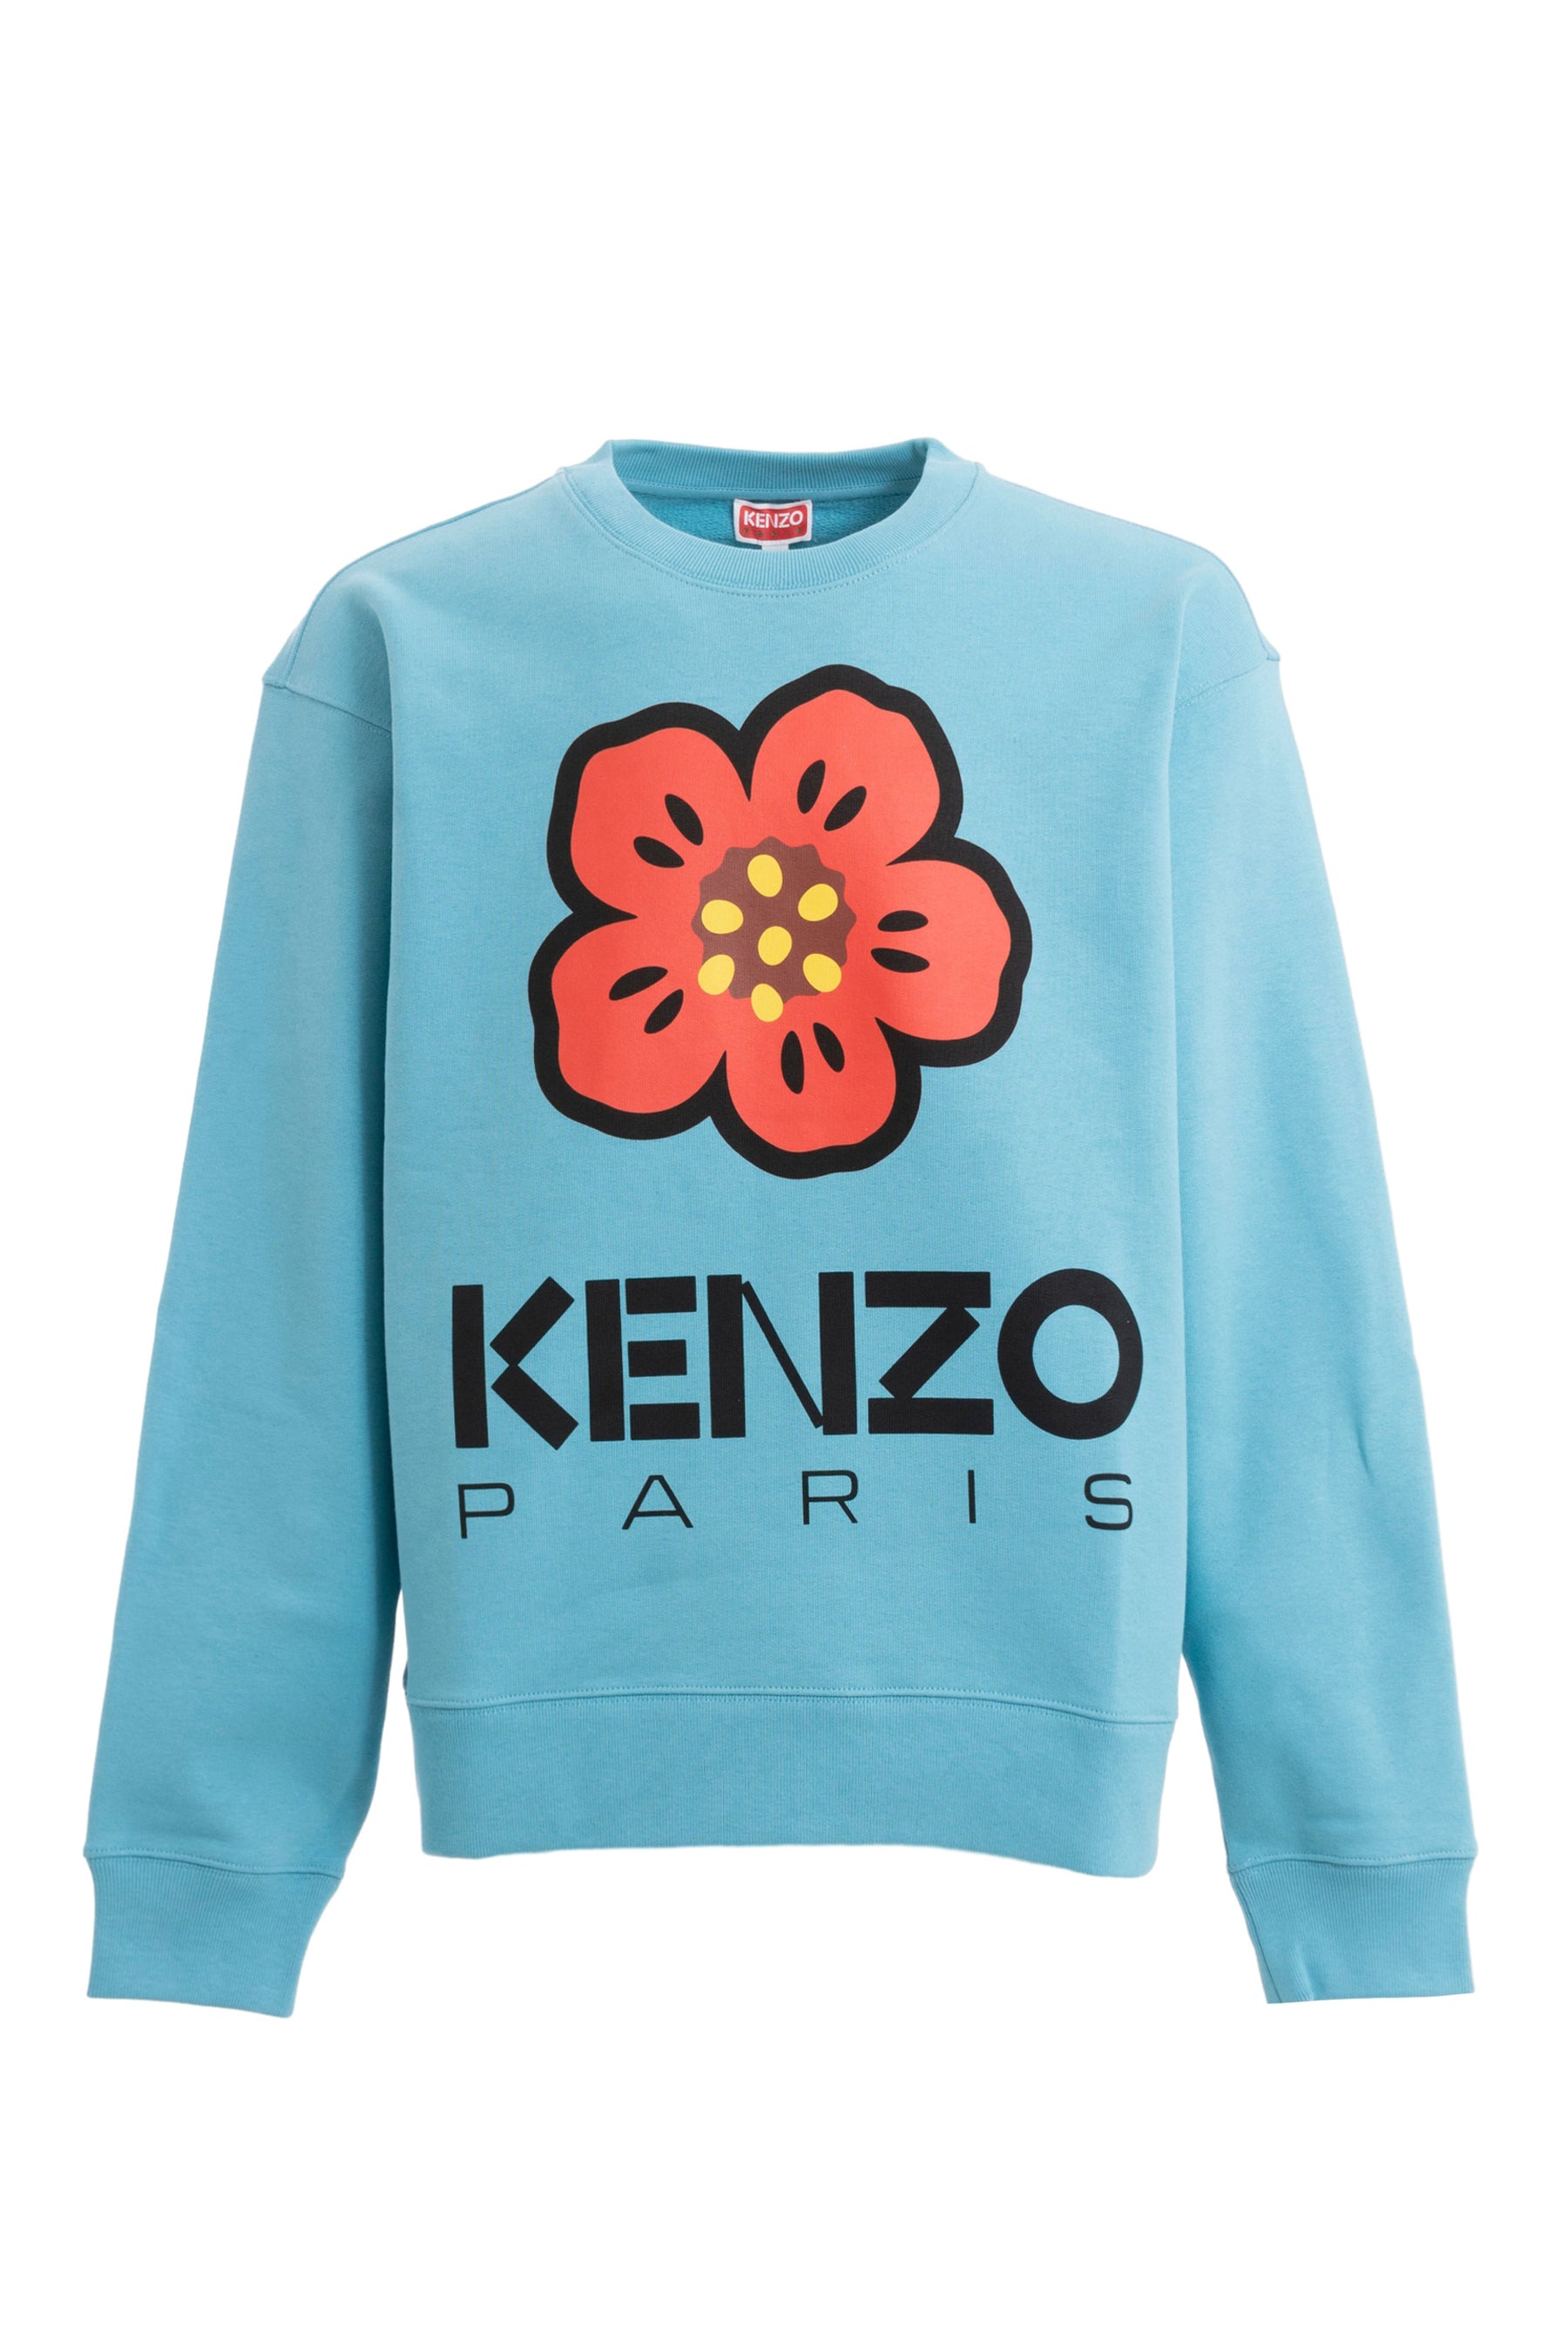 Kenzo Men's 'Boke Flower' T-Shirt M / Cyan